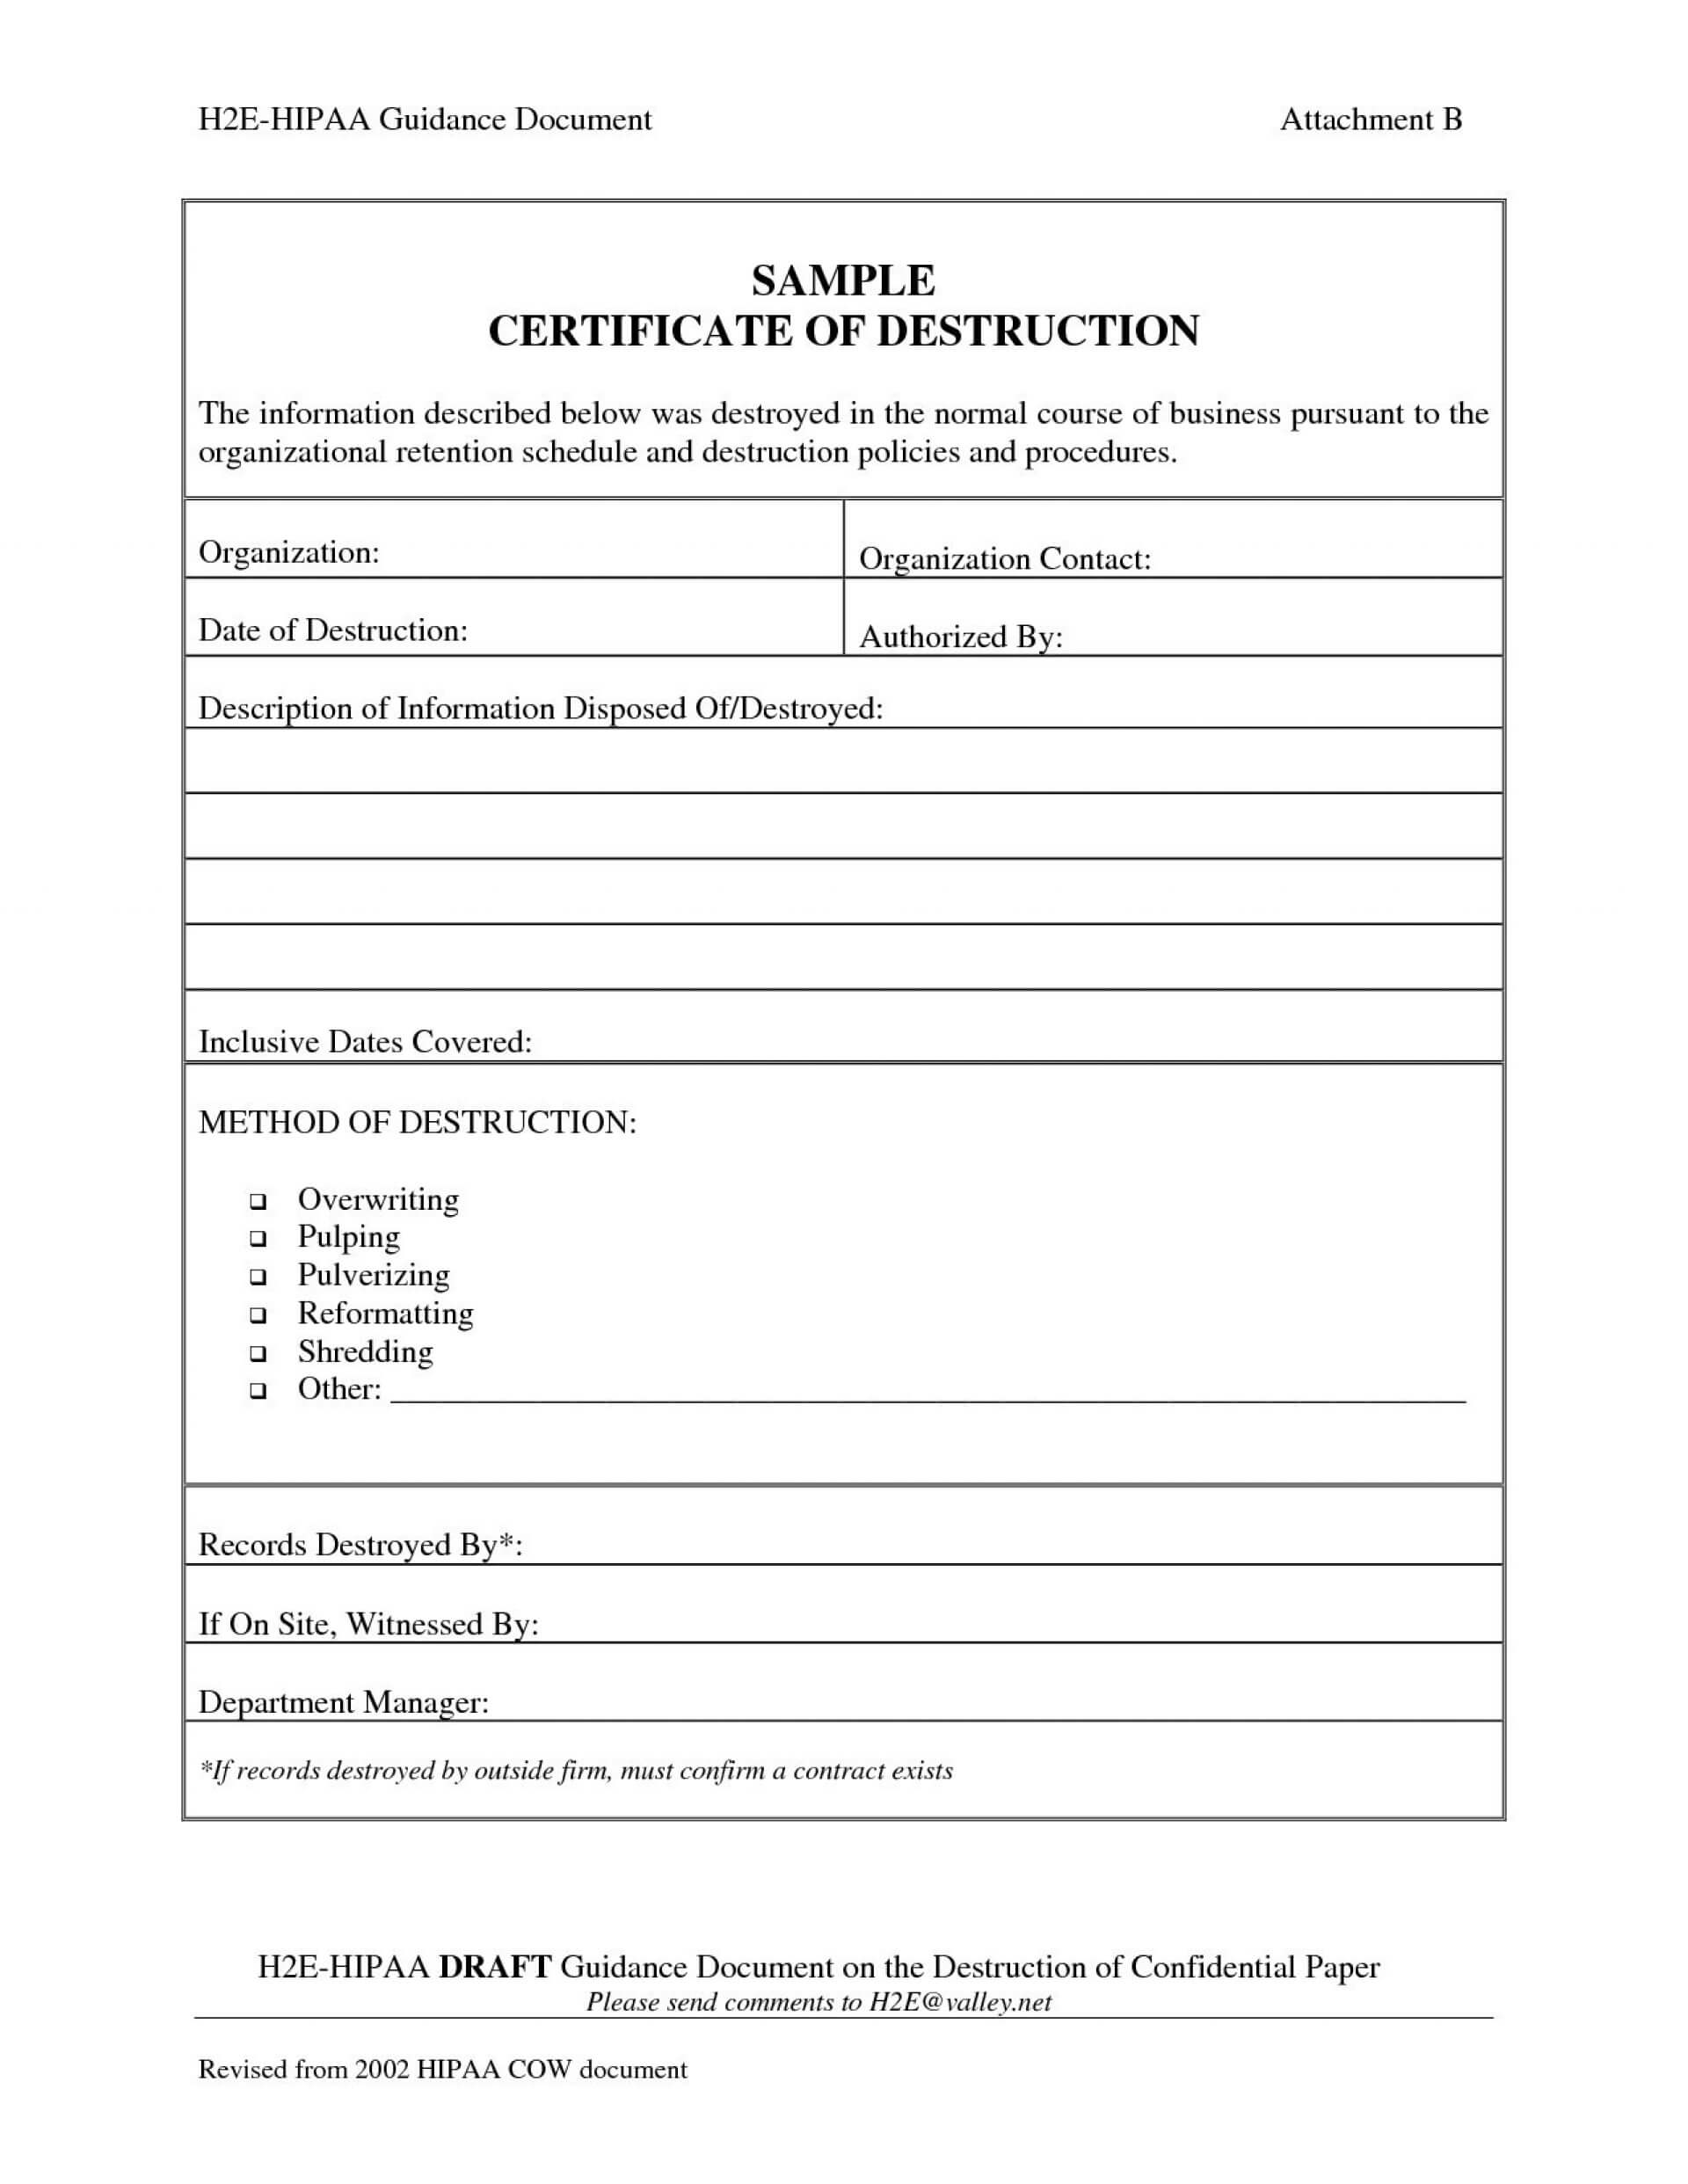 033 Certificate Of Destruction Template Hard Drive Together Within Hard Drive Destruction Certificate Template